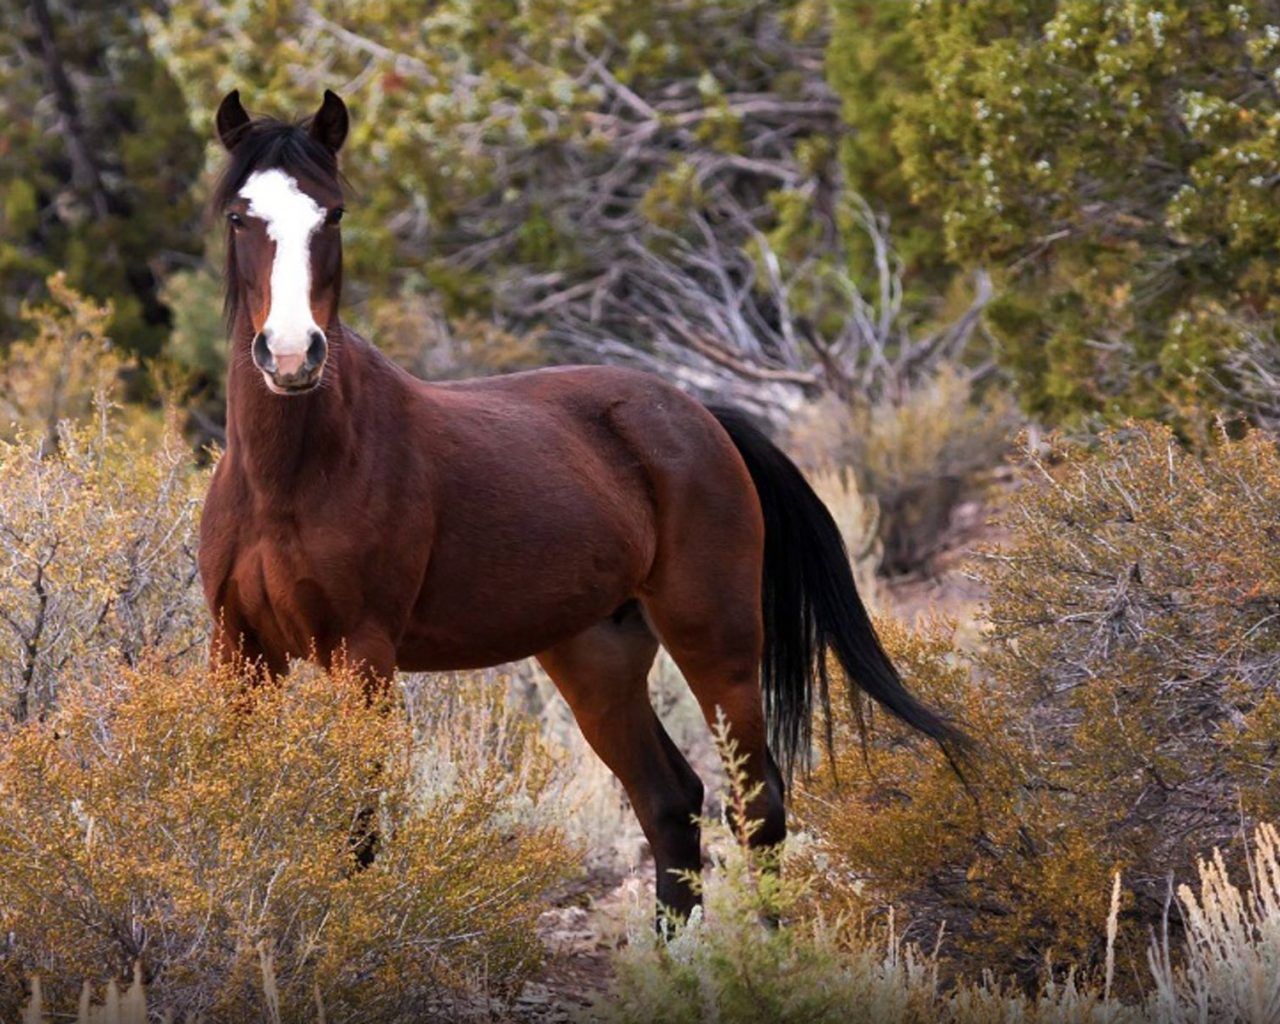 Mustang Wild Horse In Nature Originated By Spanish Mustangs Horses Brought To America Desktop Wallpaper HD 1920x1200, Wallpaper13.com